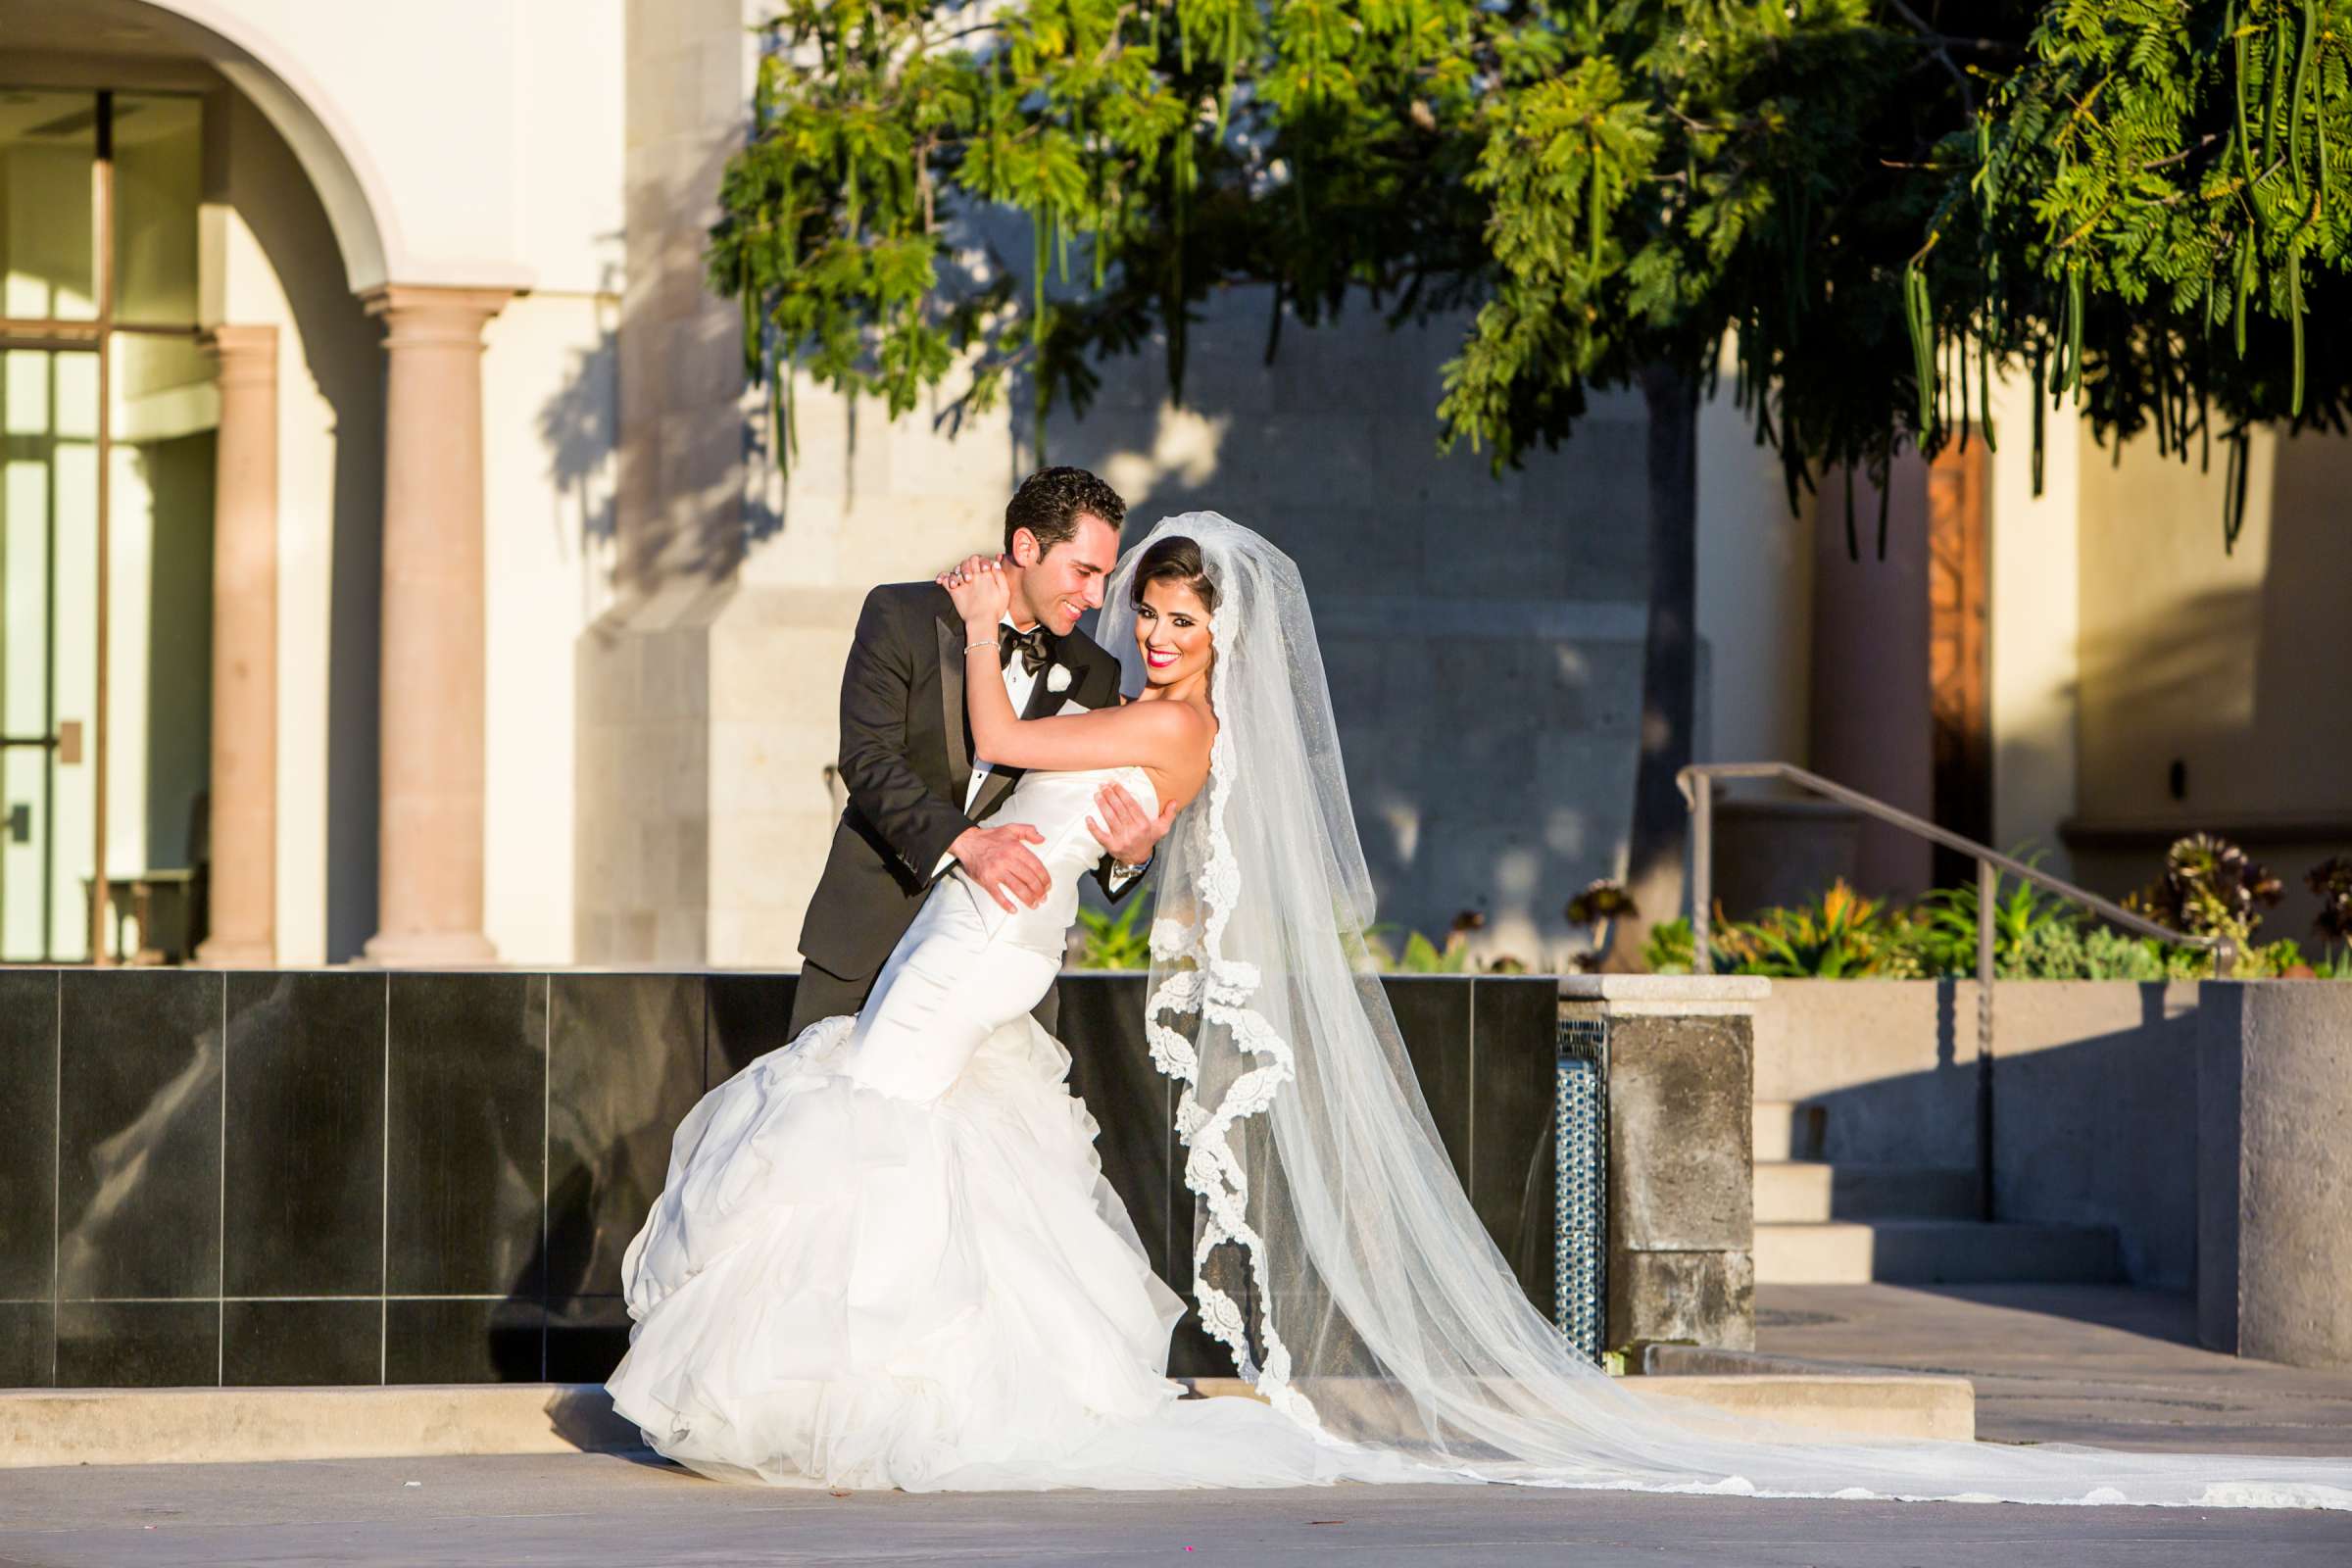 Hyatt Regency La Jolla Wedding, Kamar and Sean Wedding Photo #1 by True Photography